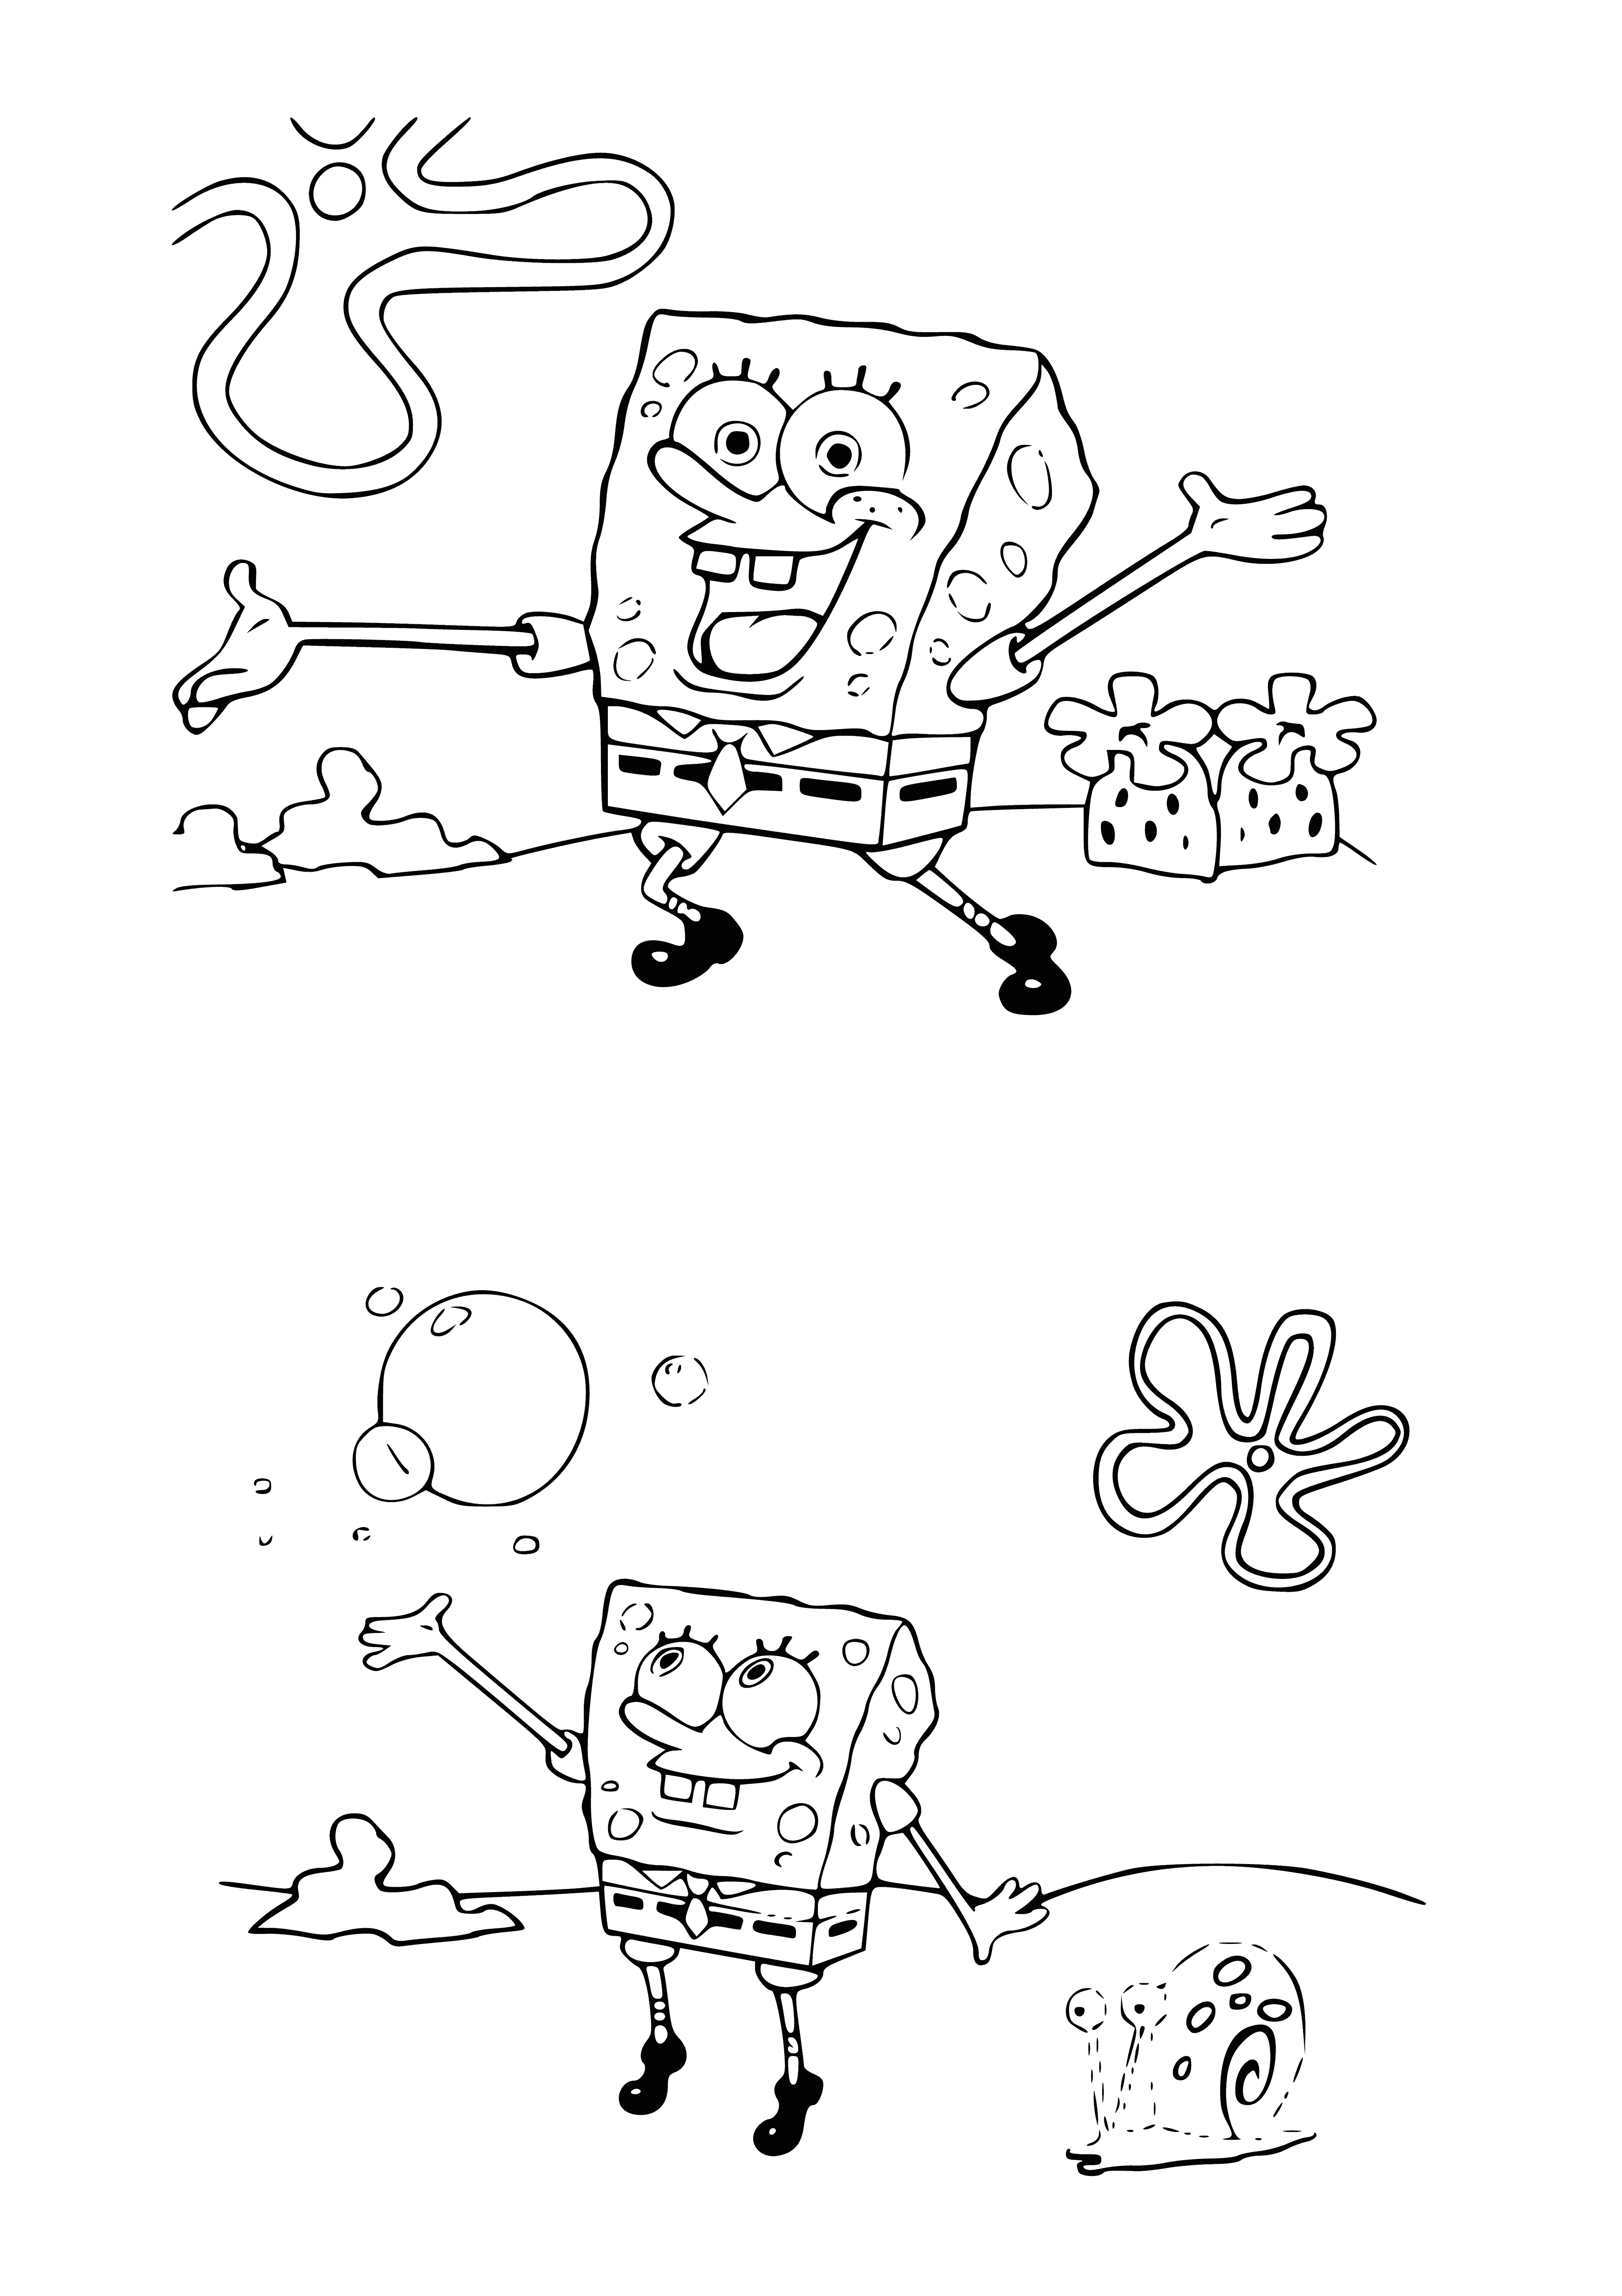 SpongeBob Squarepants coloring page